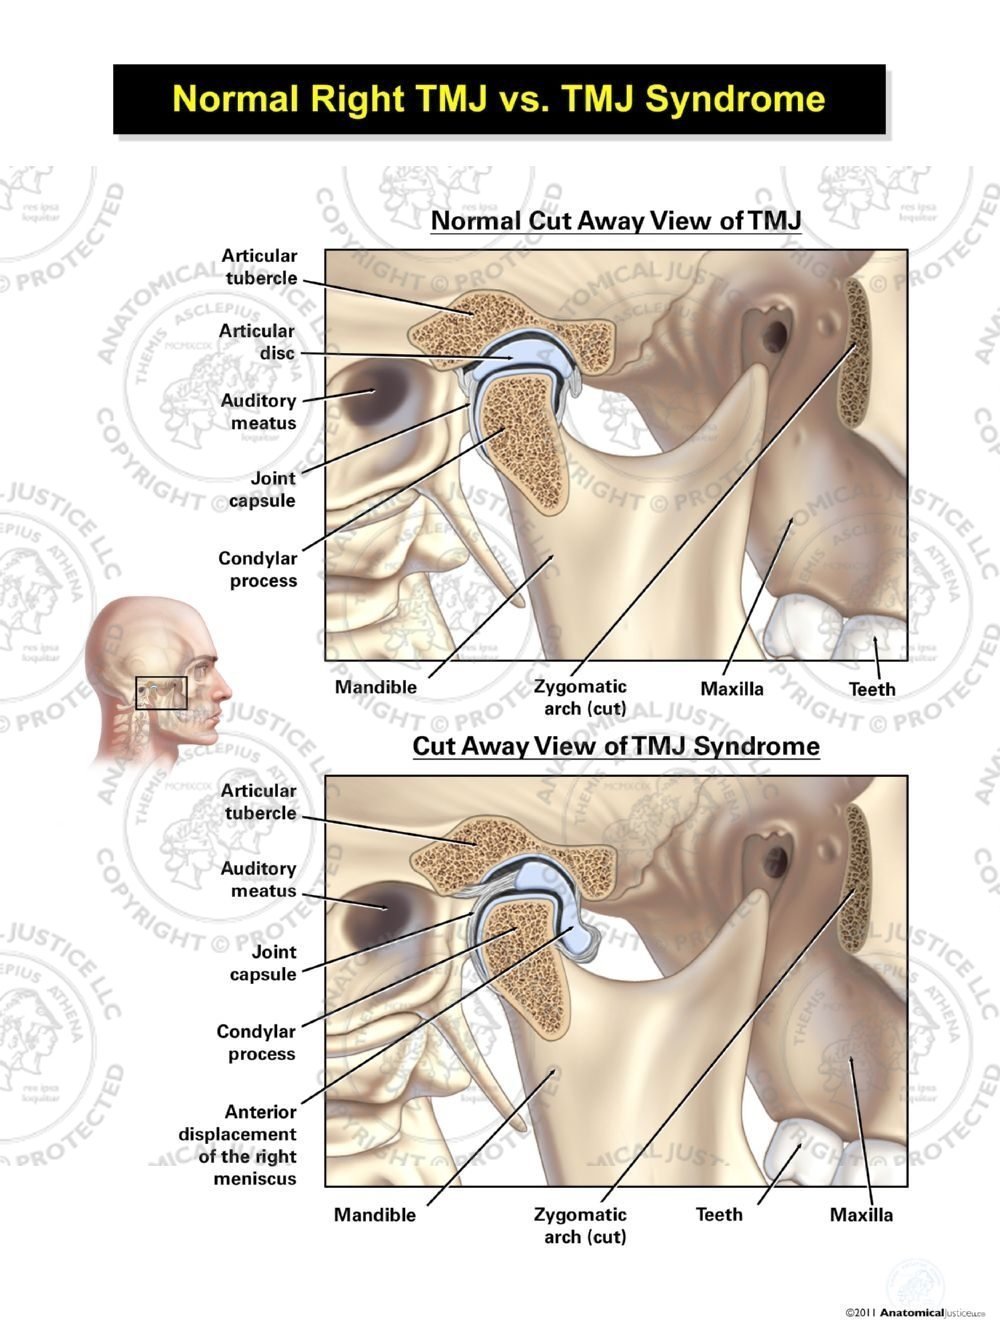 Normal Right TMJ vs. TMJ Syndrome